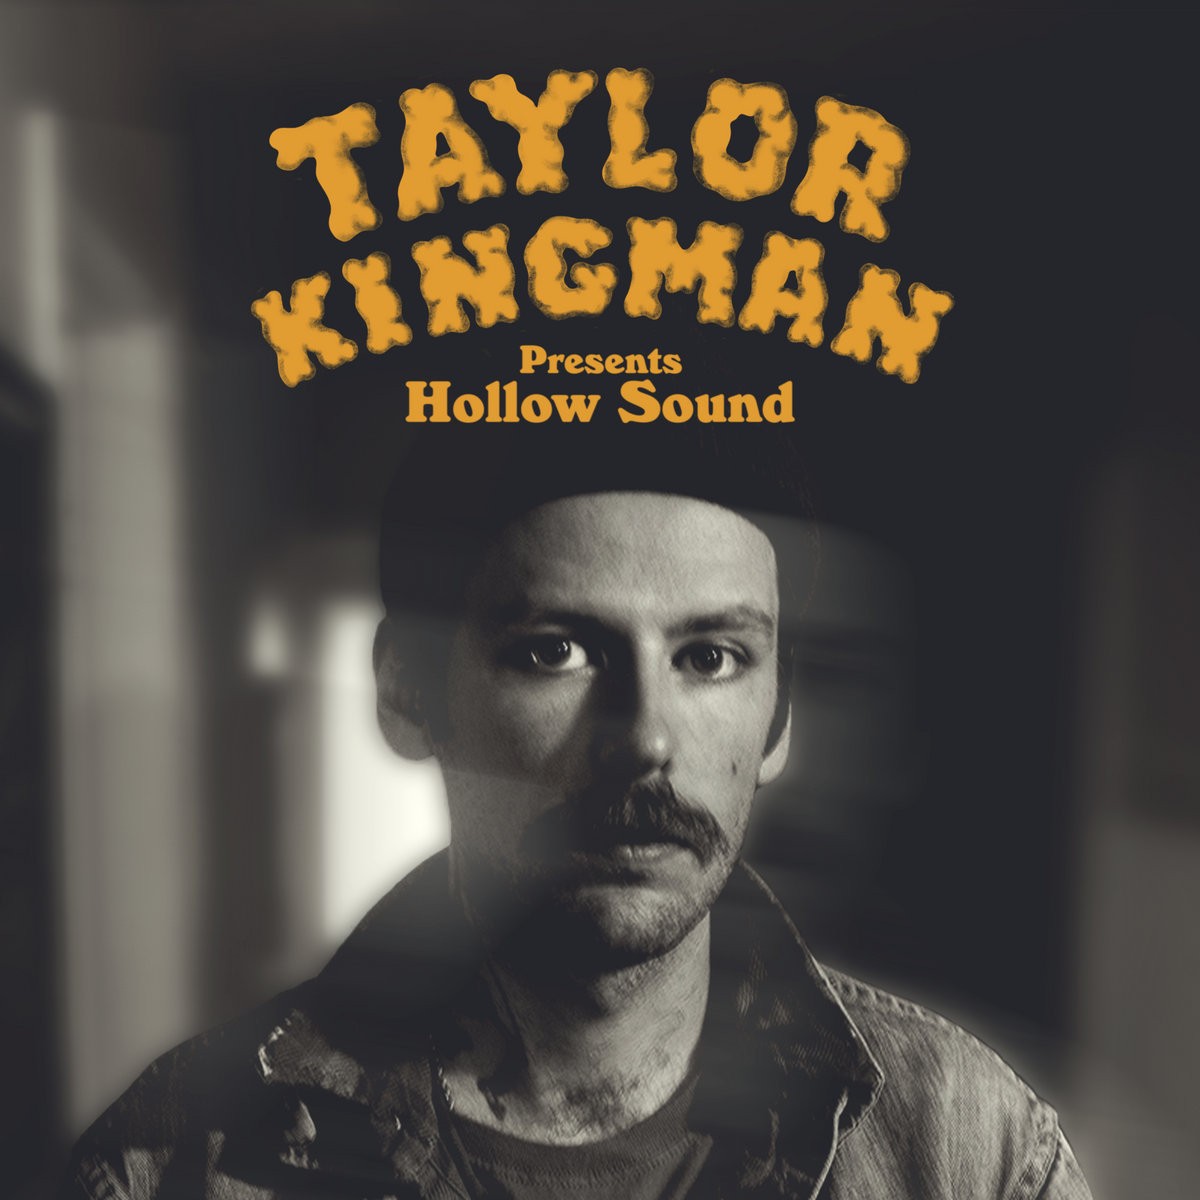 Taylor Kingman - Presents Hollow Sound